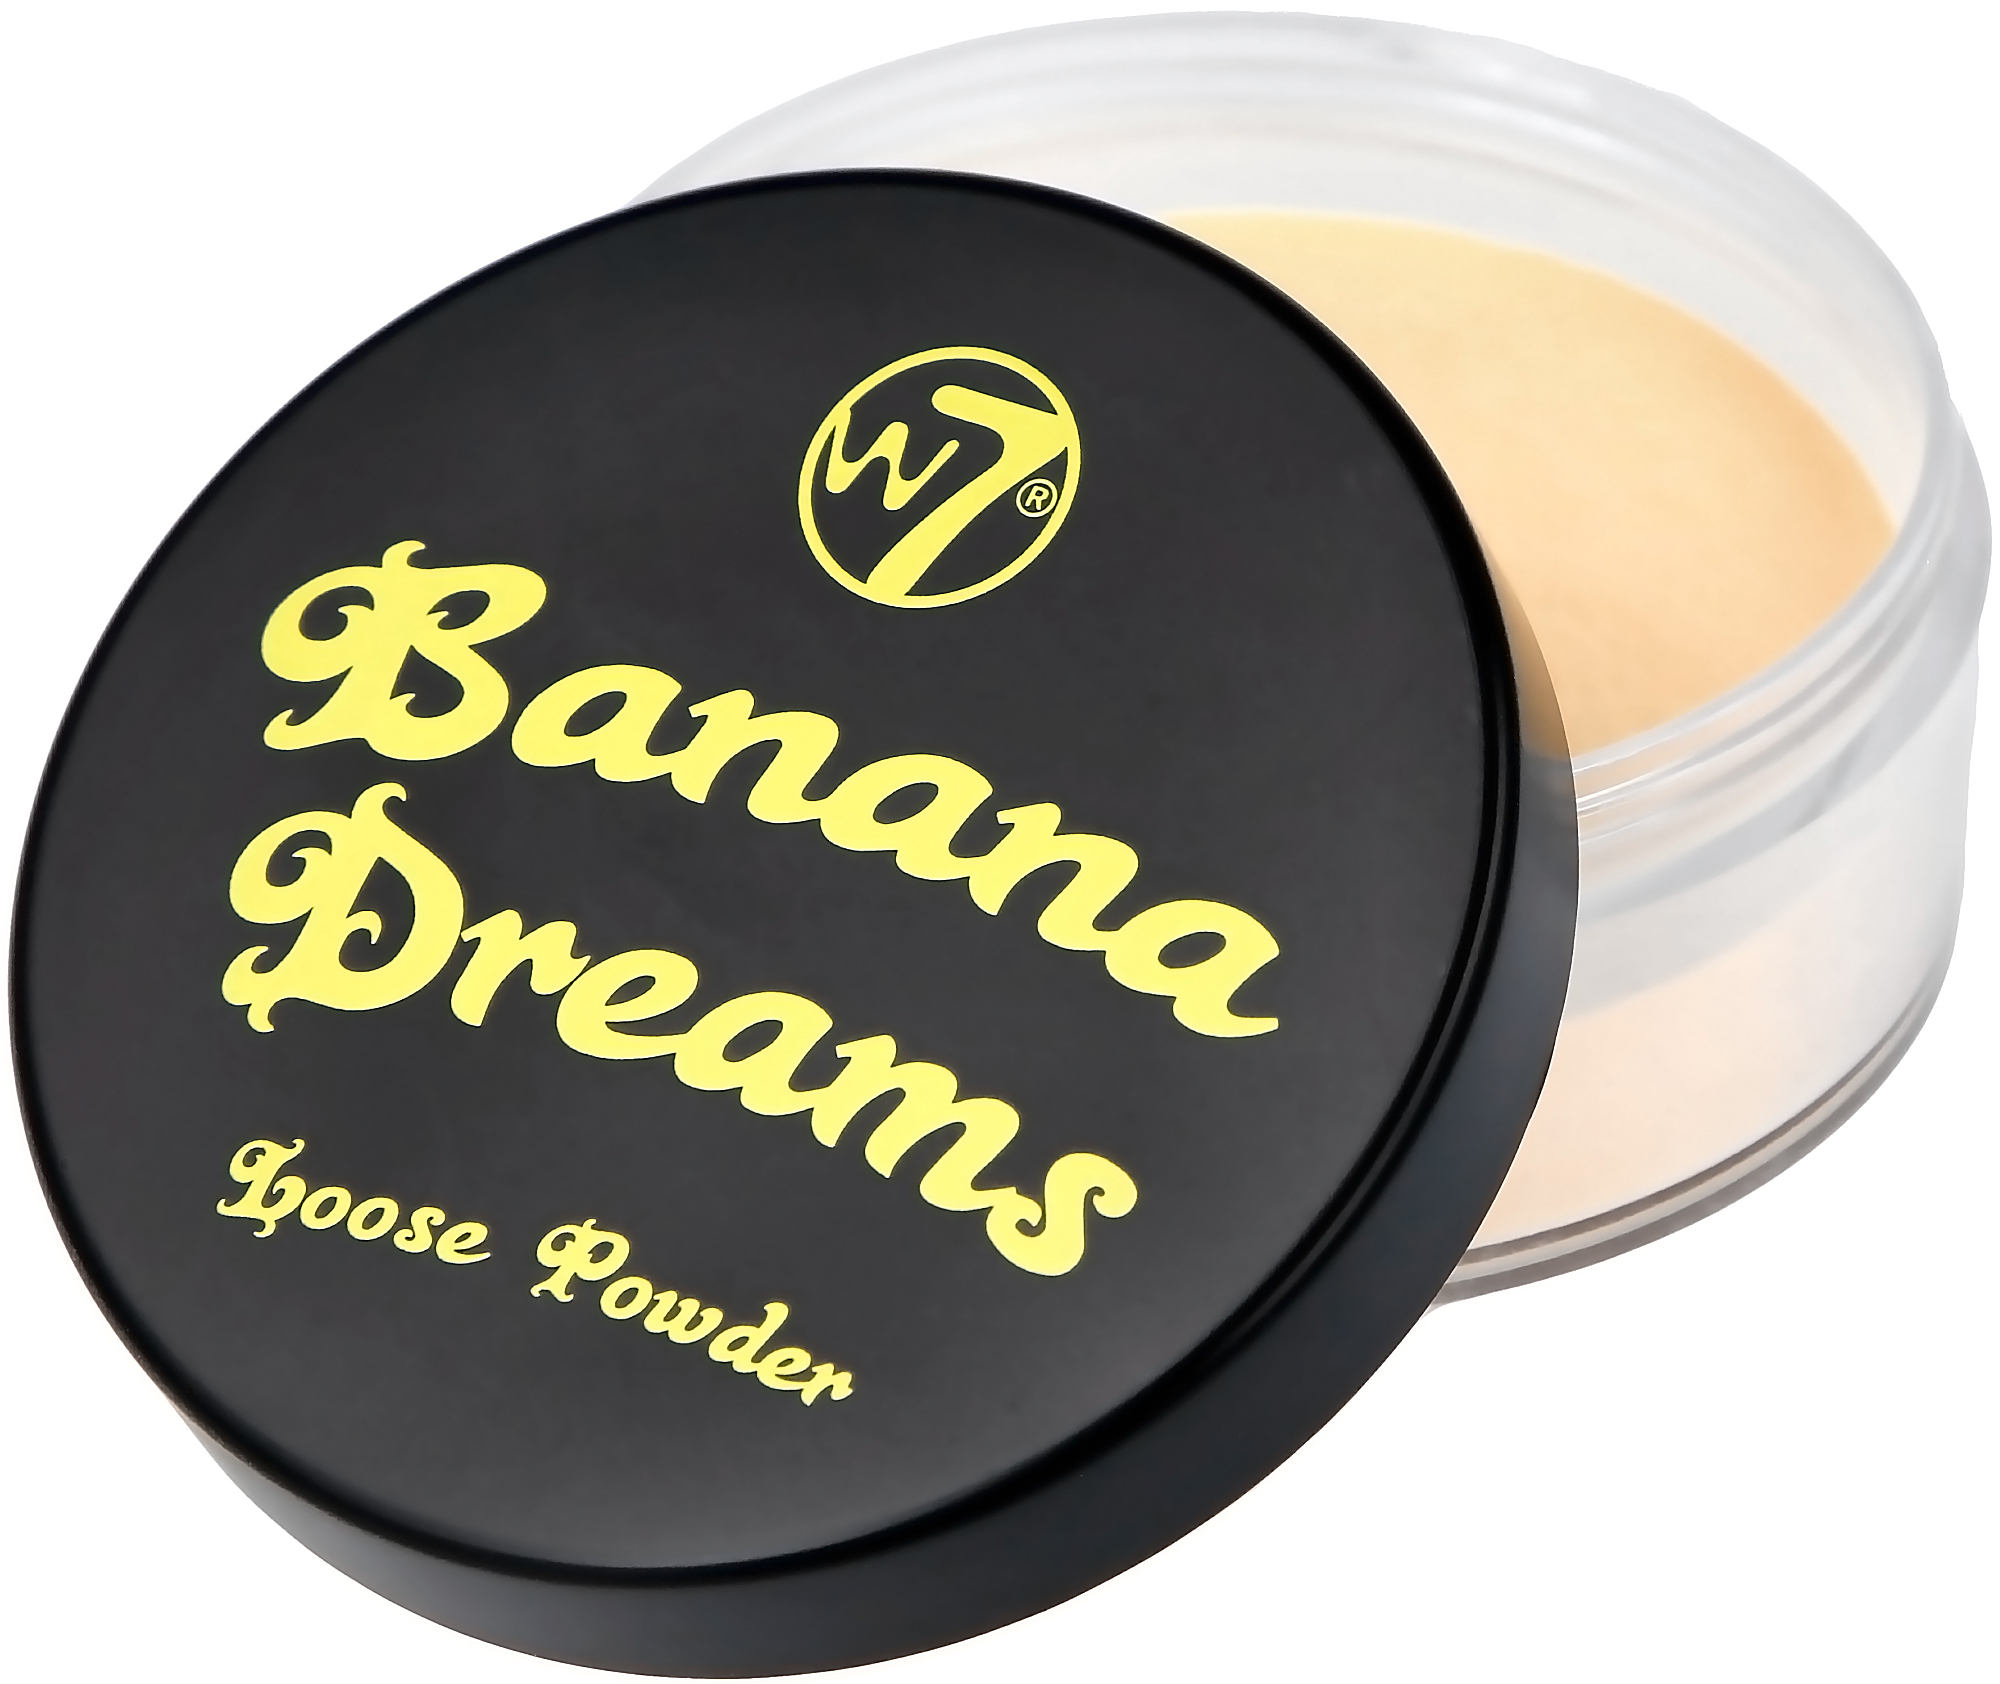 Banana Dreams Loose Powder Banana Dreams Loose Powder | lyko.com